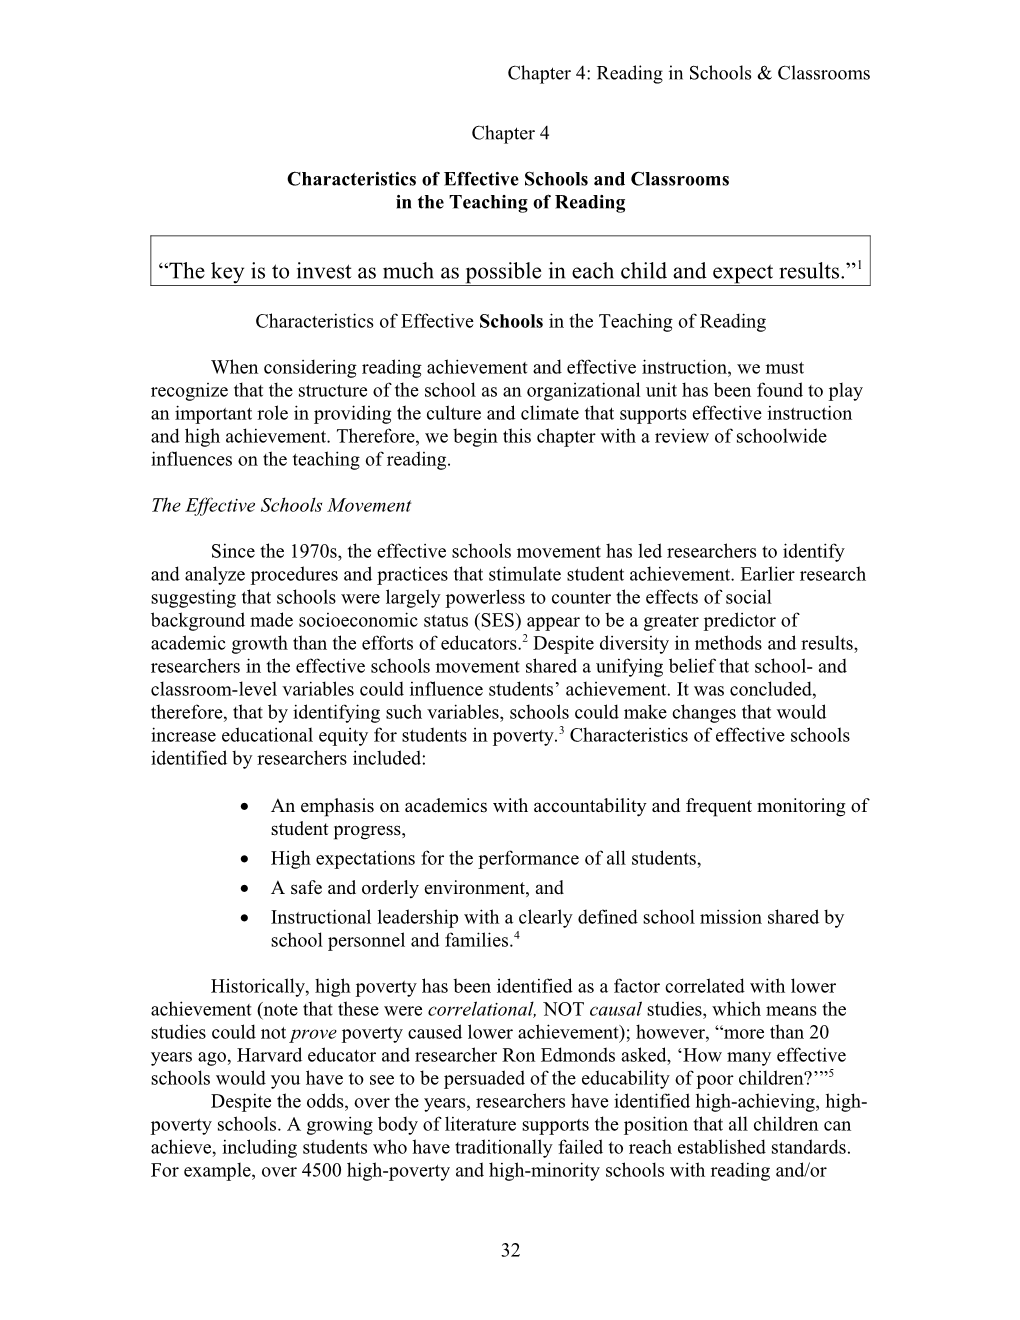 Characteristics of Effective Schools and Classrooms